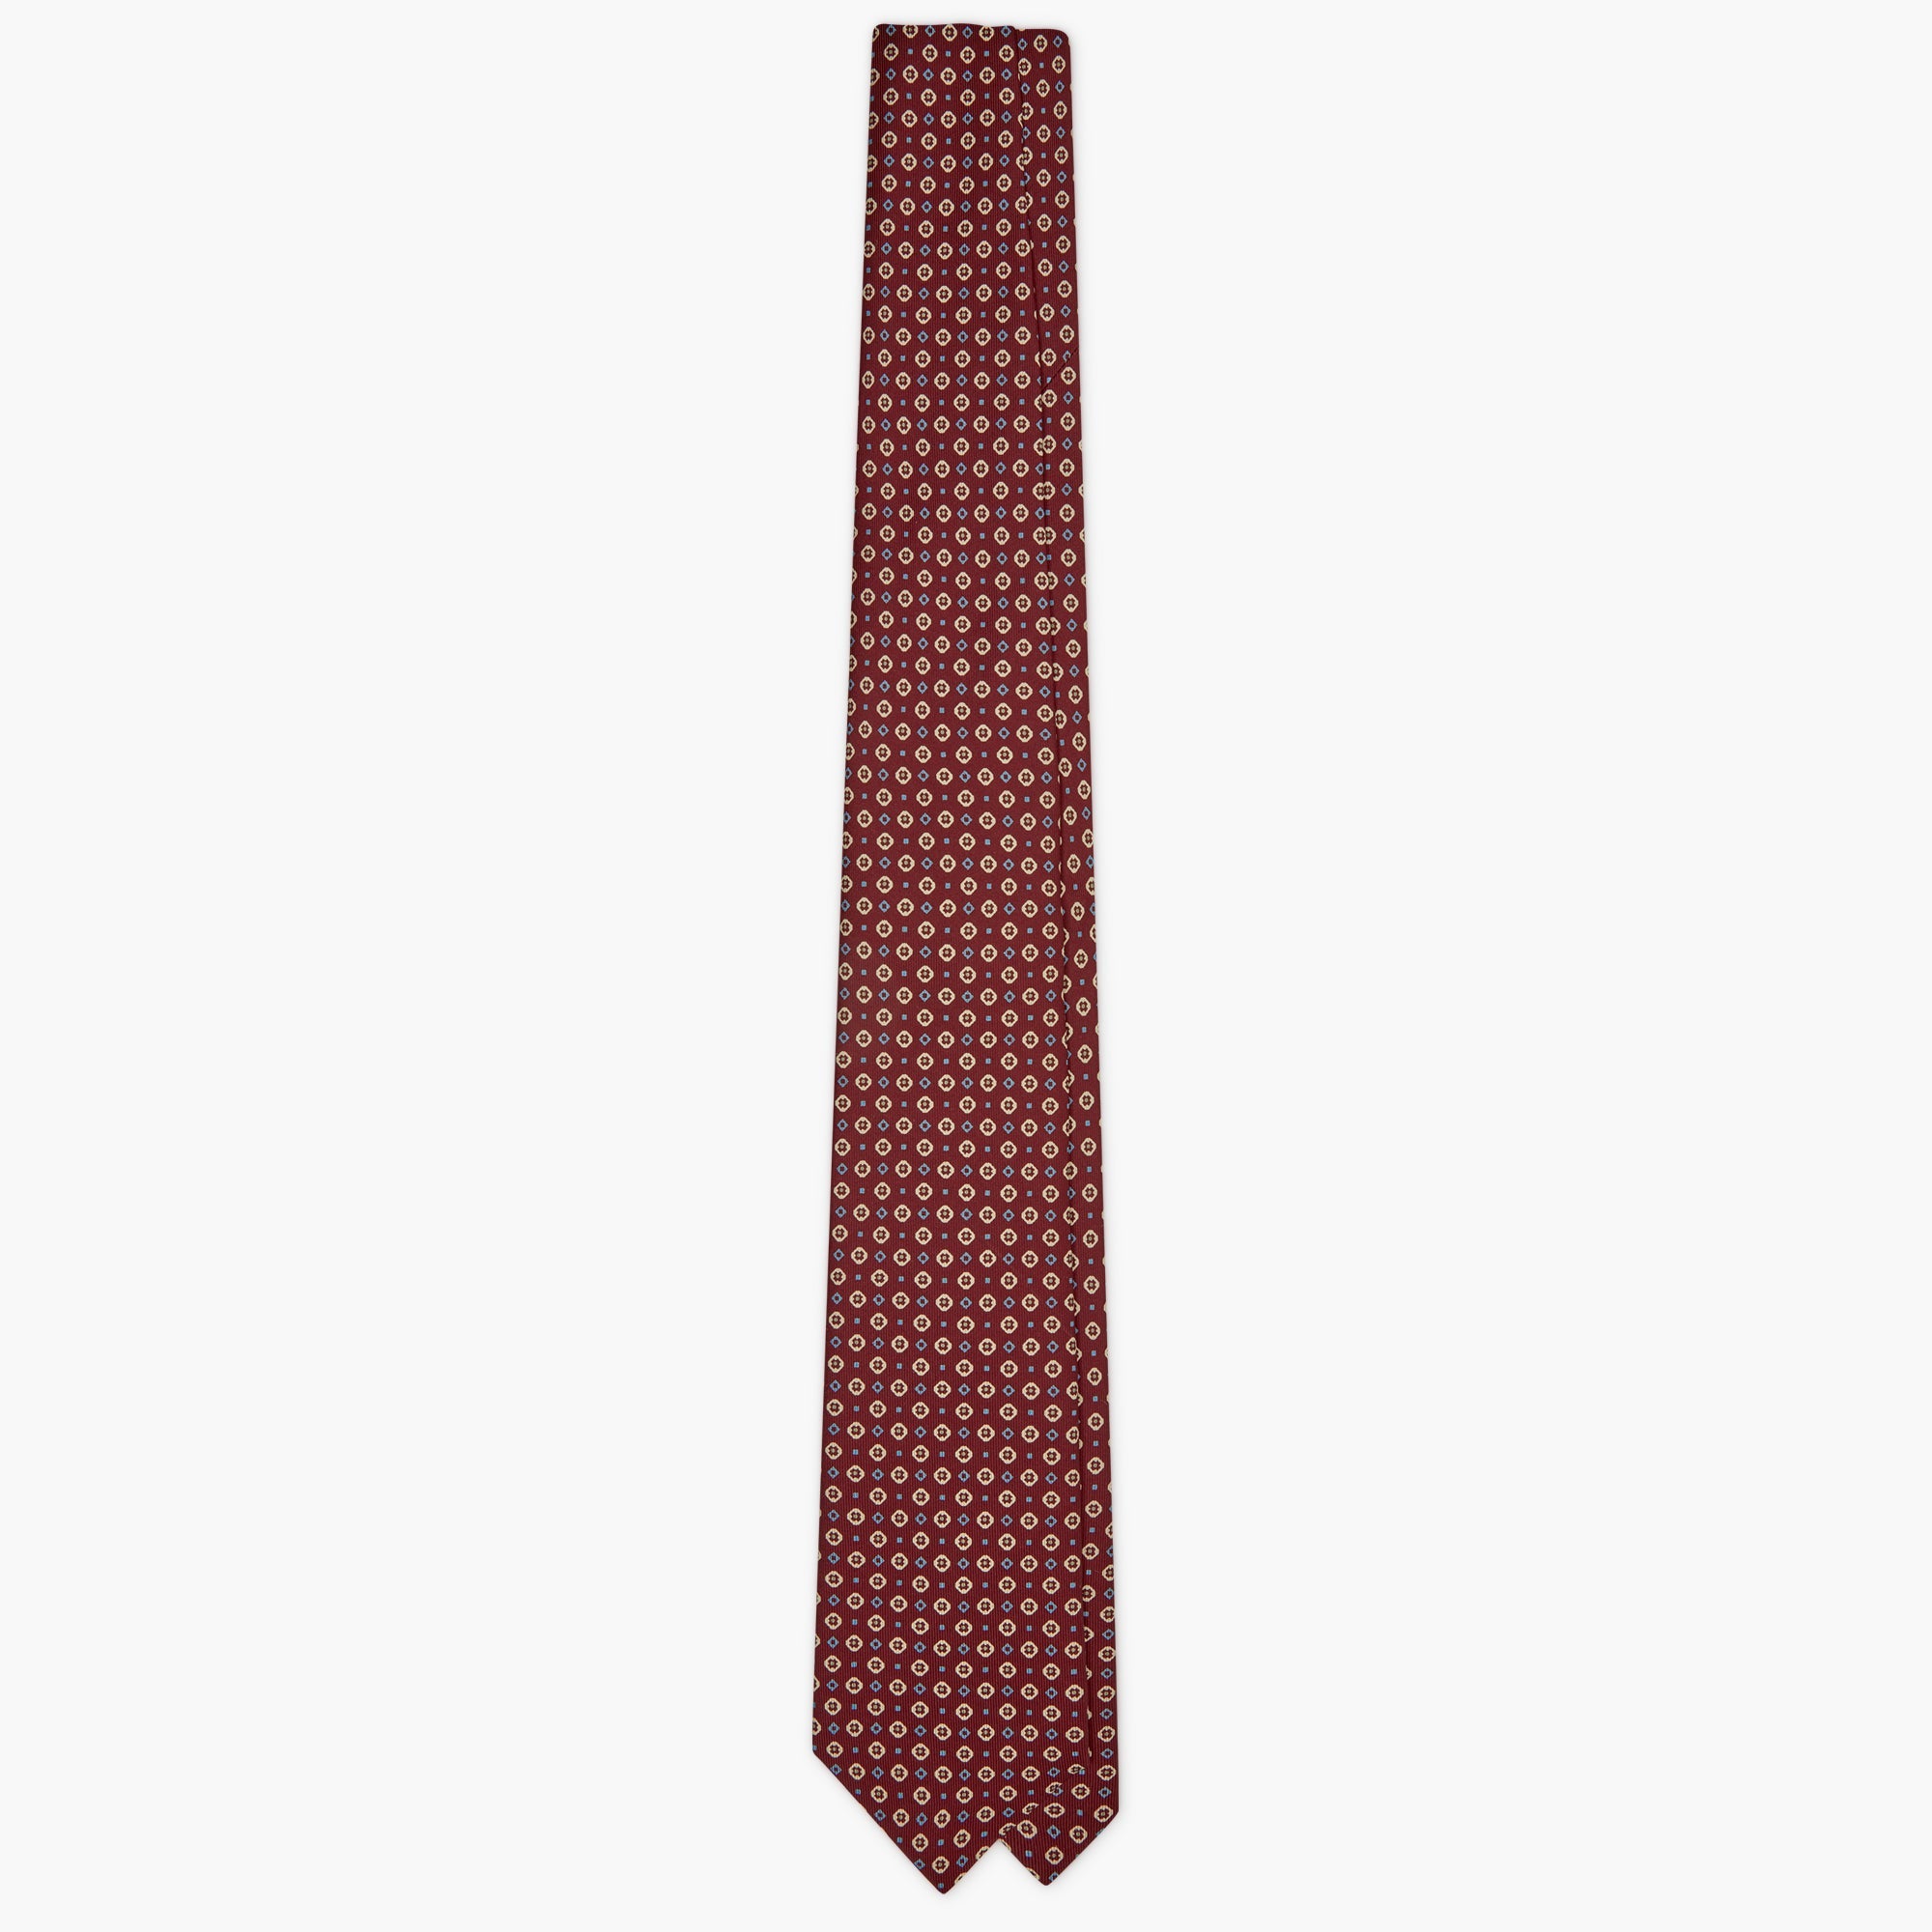 7 fold micro pattern printed english silk tie burgundy - cravatta 7 pieghe stampata seta inglese bordeaux